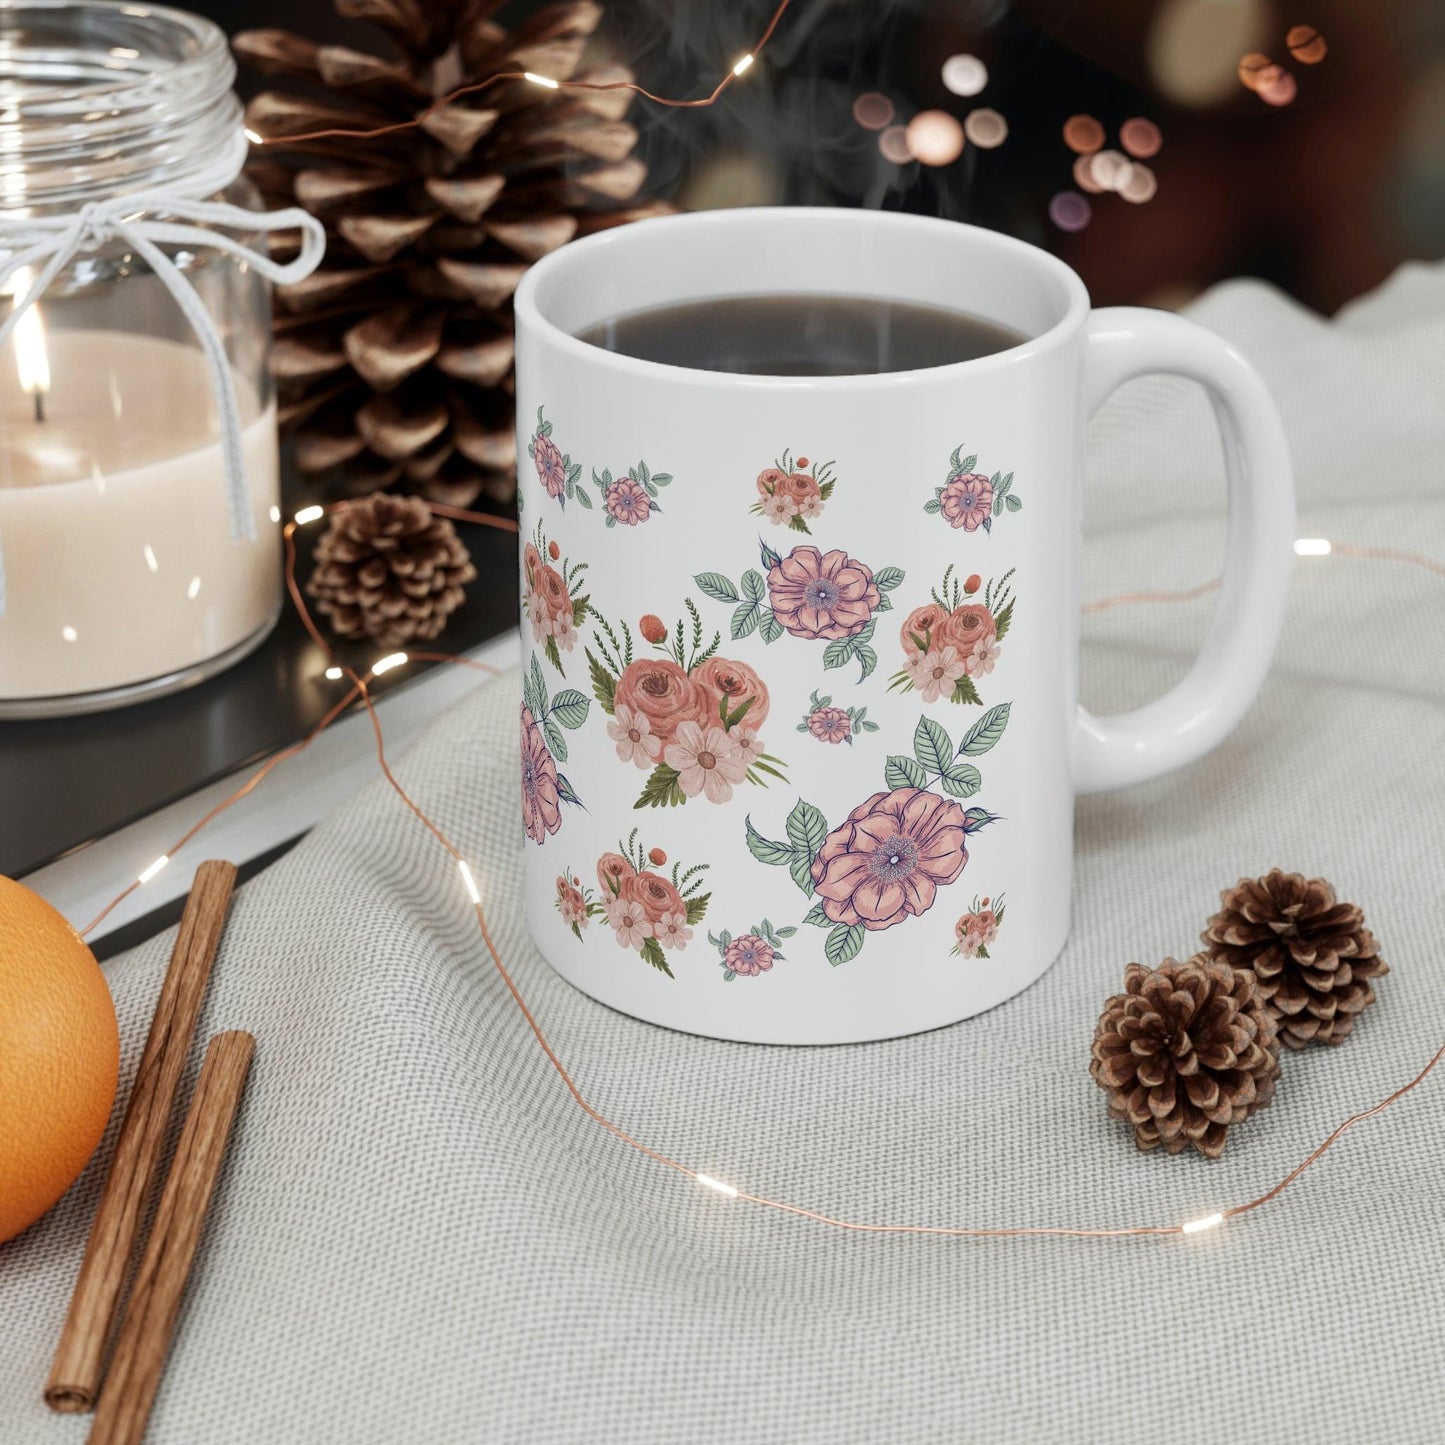 Vintage Floral Mug, gift for mom on mothers day, Birthday gift for mom, gift for plant lovers, hot cocoa mug, gift for coffee lover